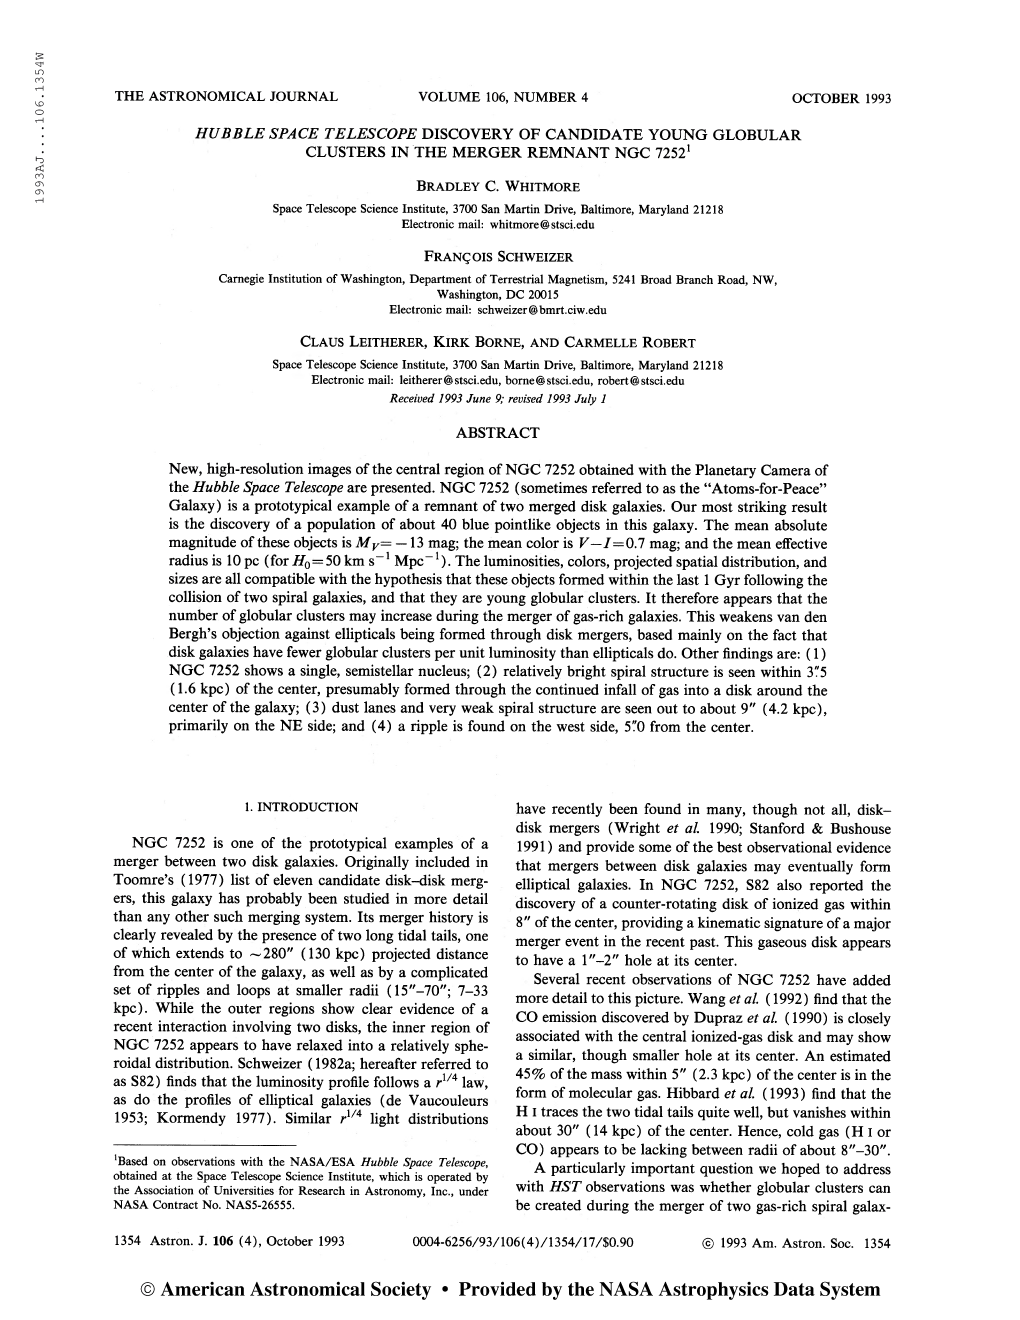 1993Aj 106.1354W the Astronomical Journal